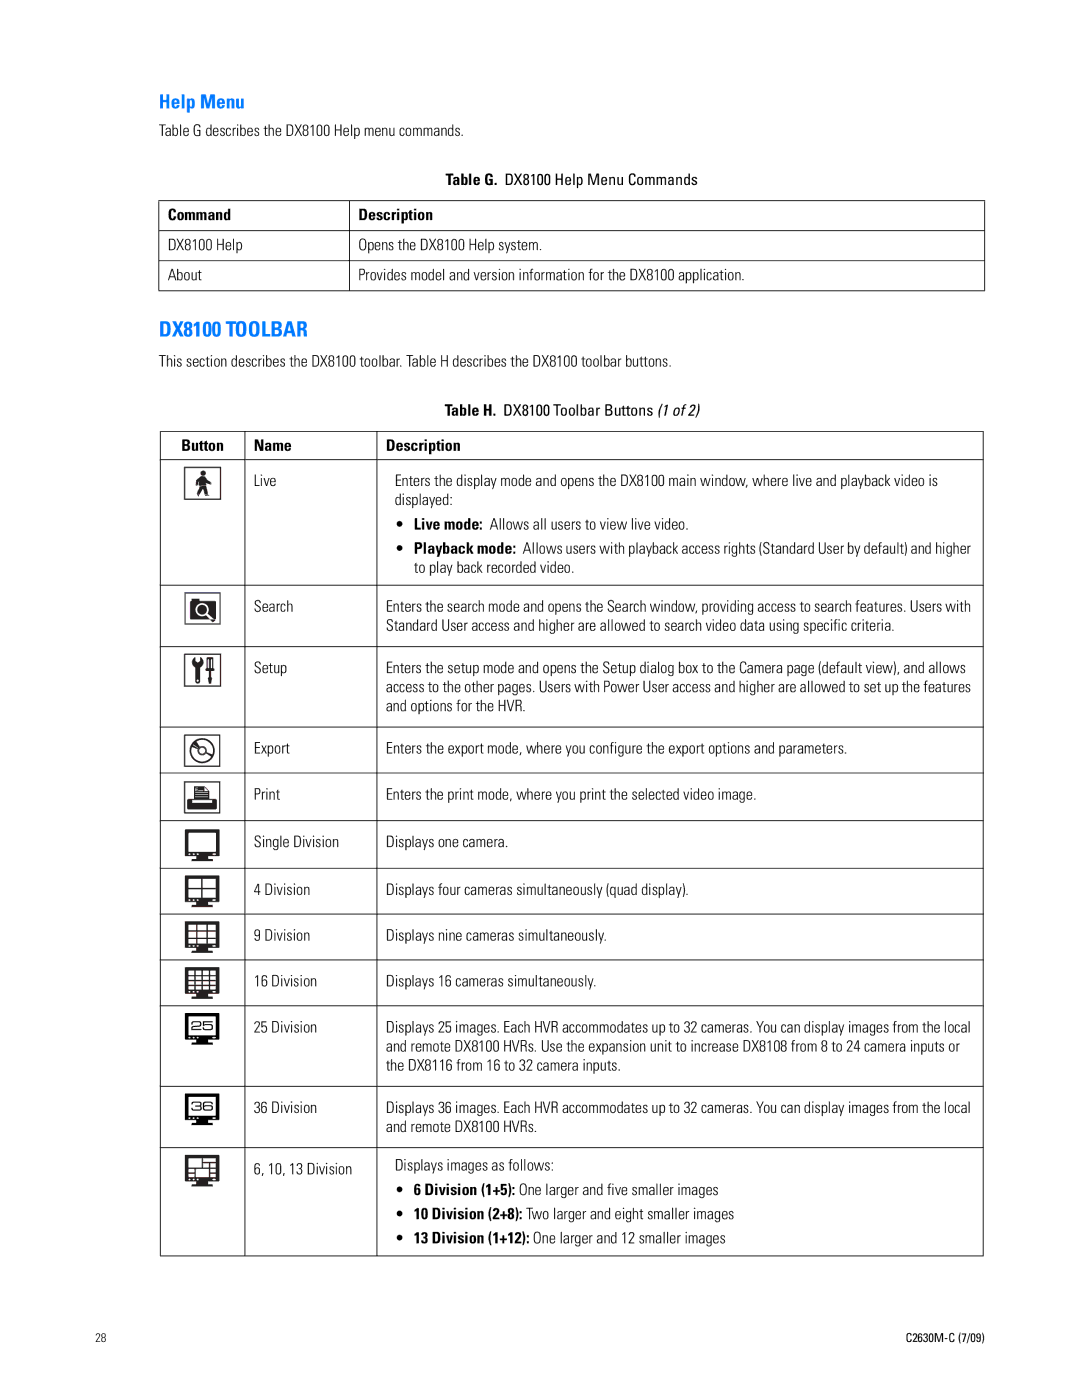 Pelco dx8100 manual Help Menu, Table H. DX8100 Toolbar Buttons 1, Button Name Description Live, Displayed 